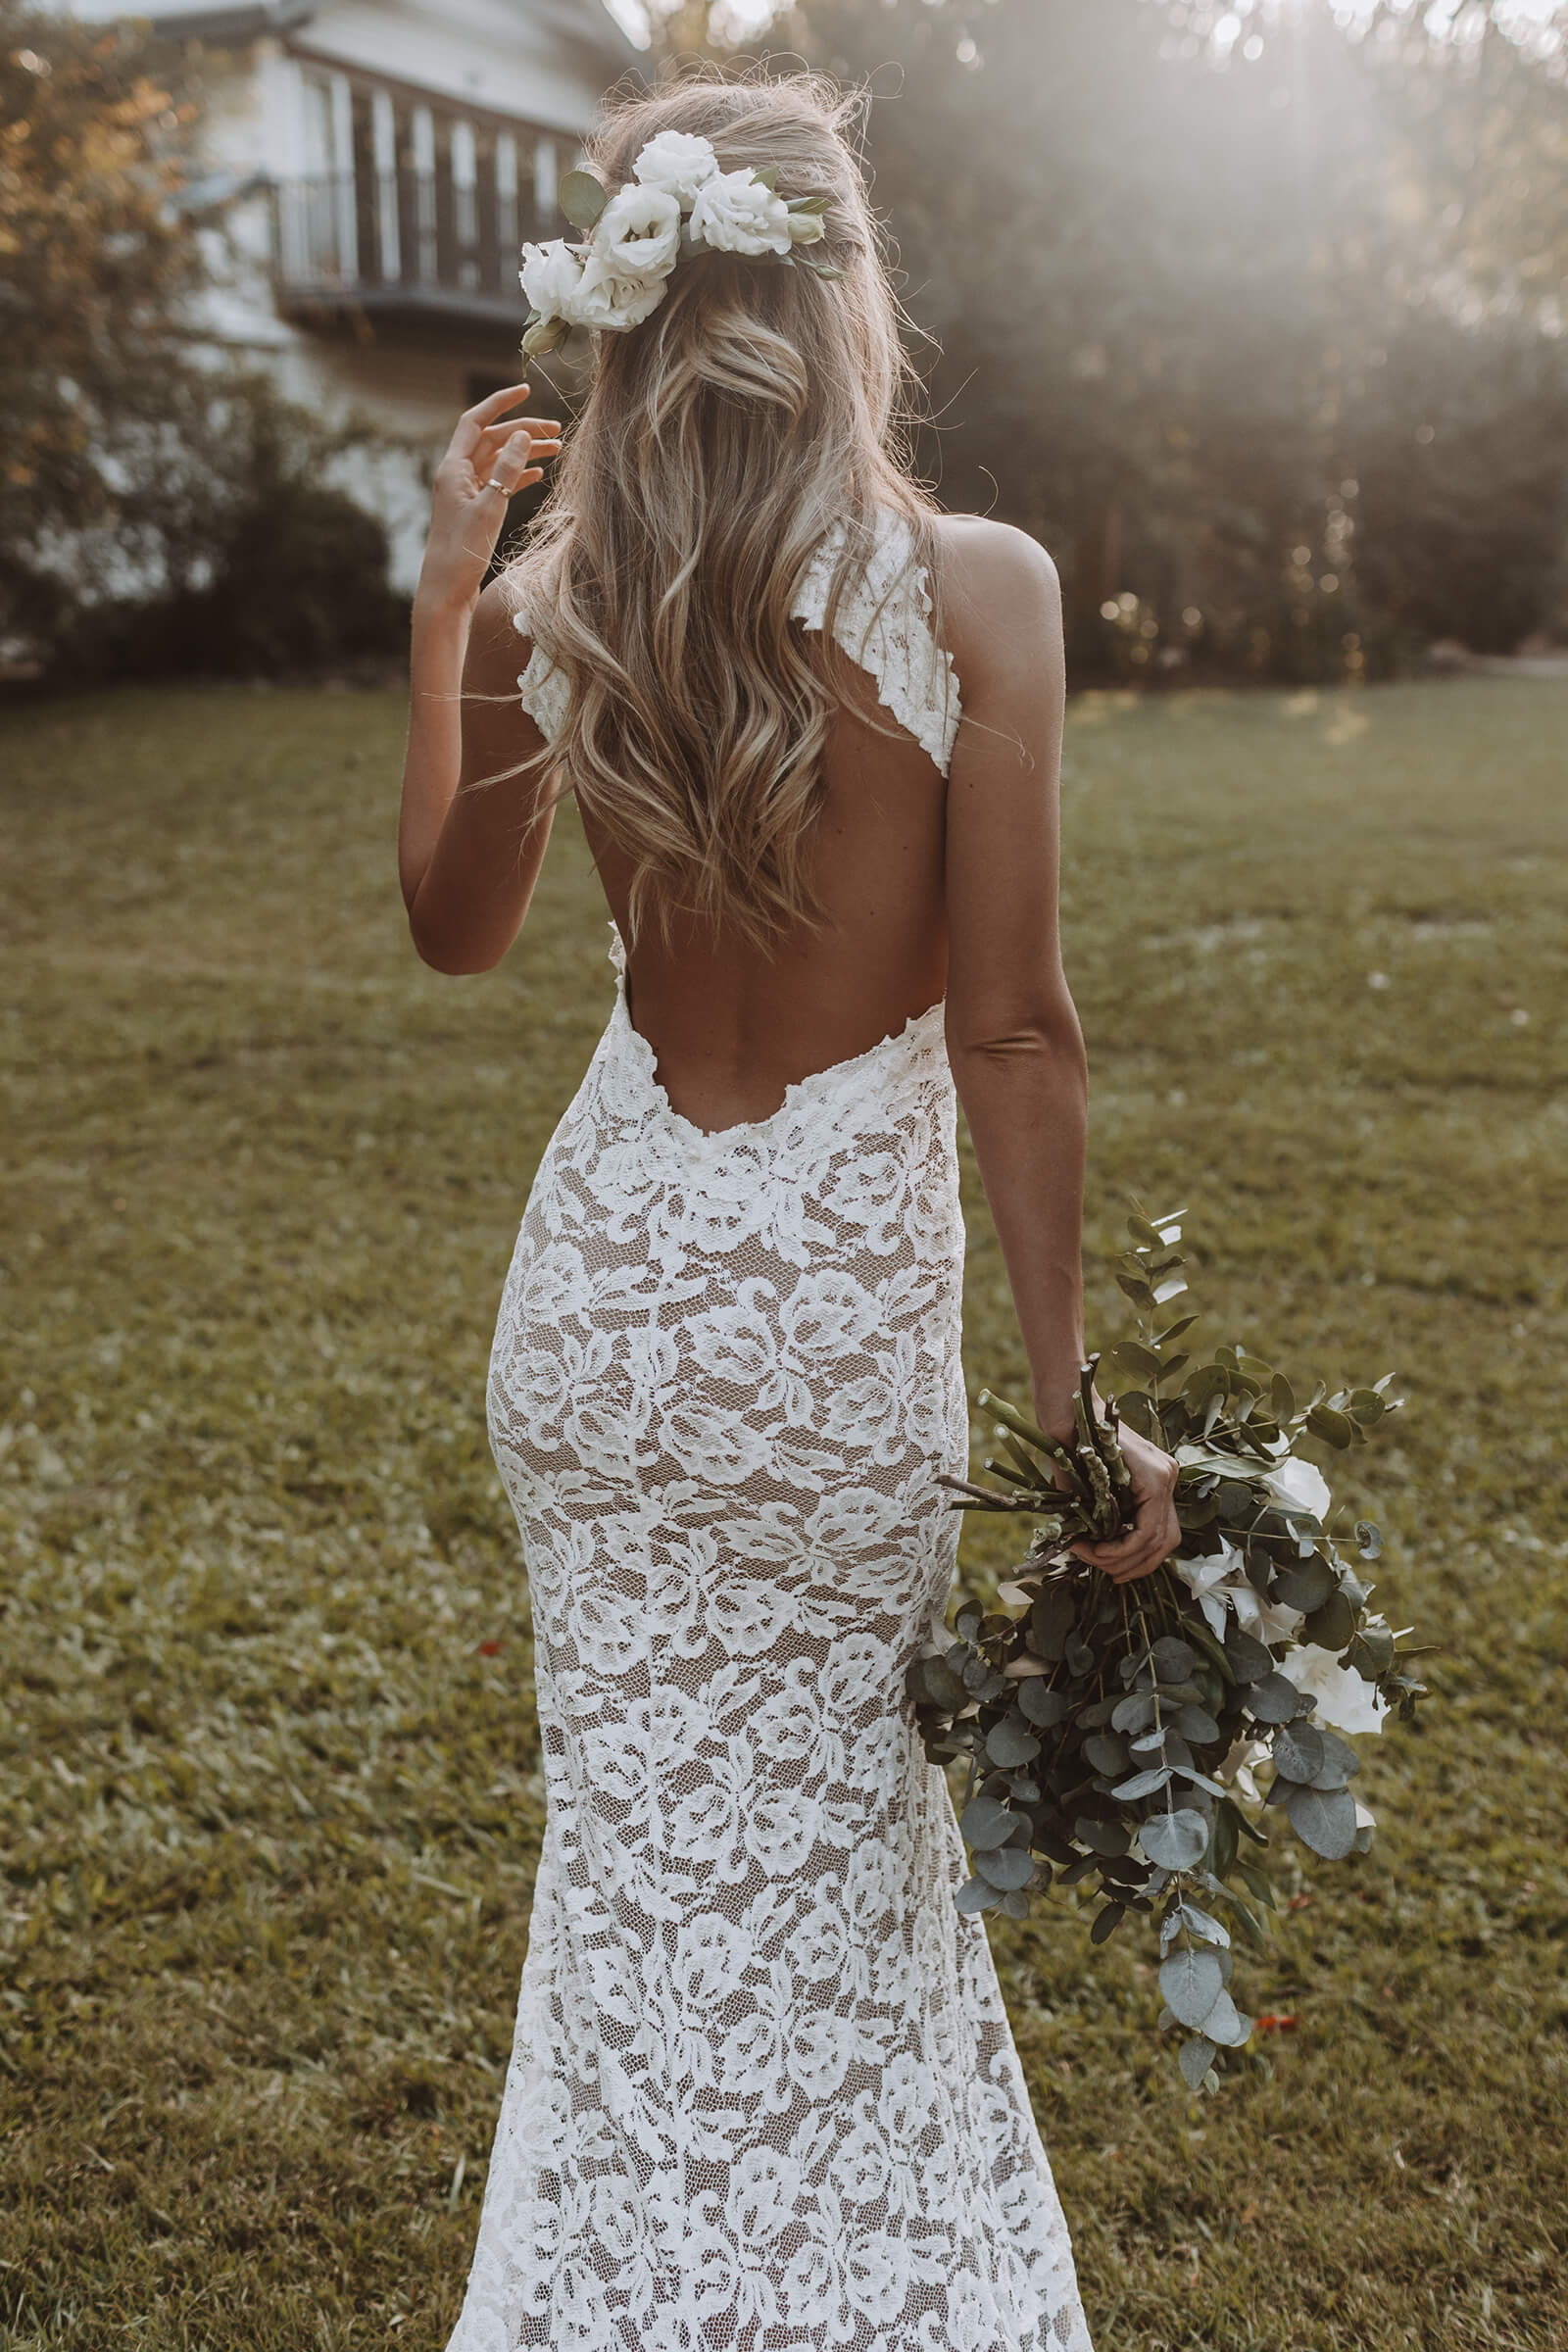 Sites to sell a wedding dress - Sidehusl.com Best sites